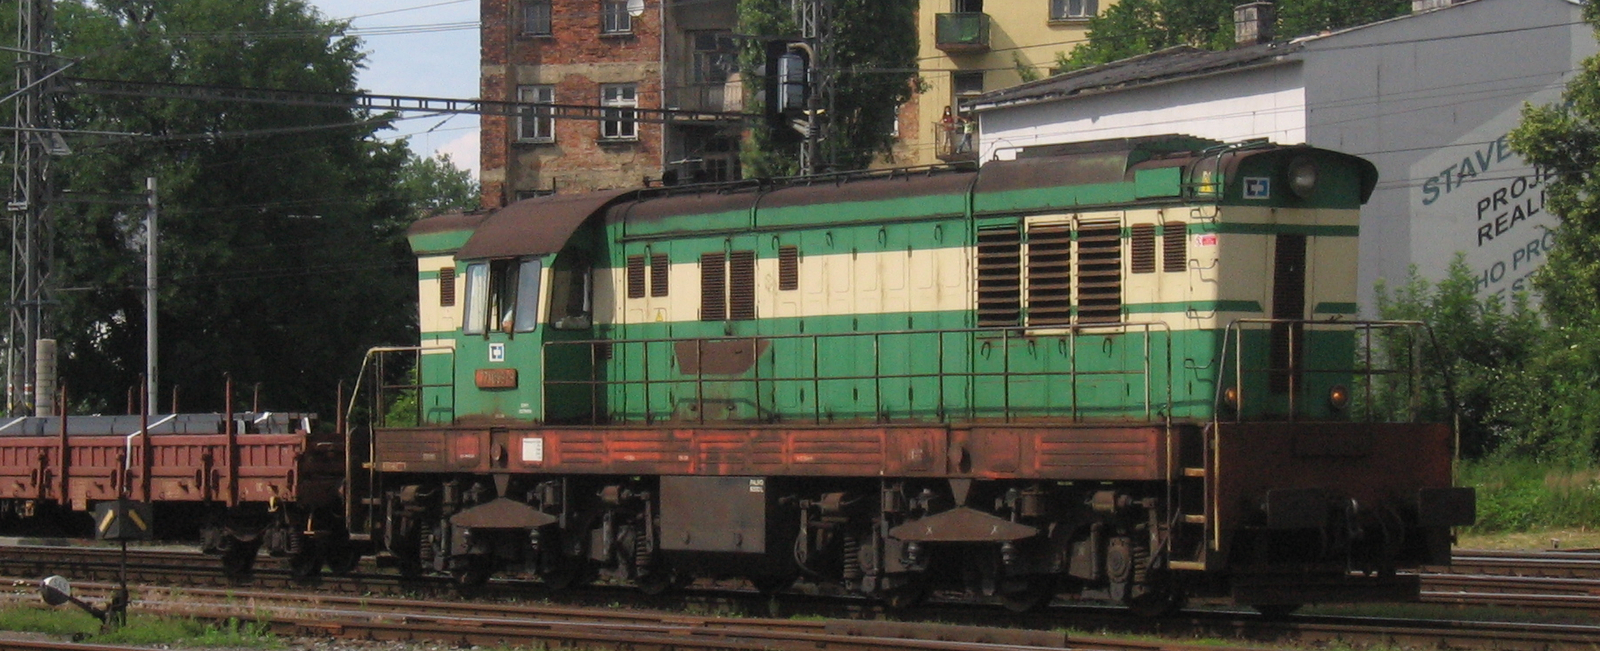 771.099 in June 2011 in Ostrava